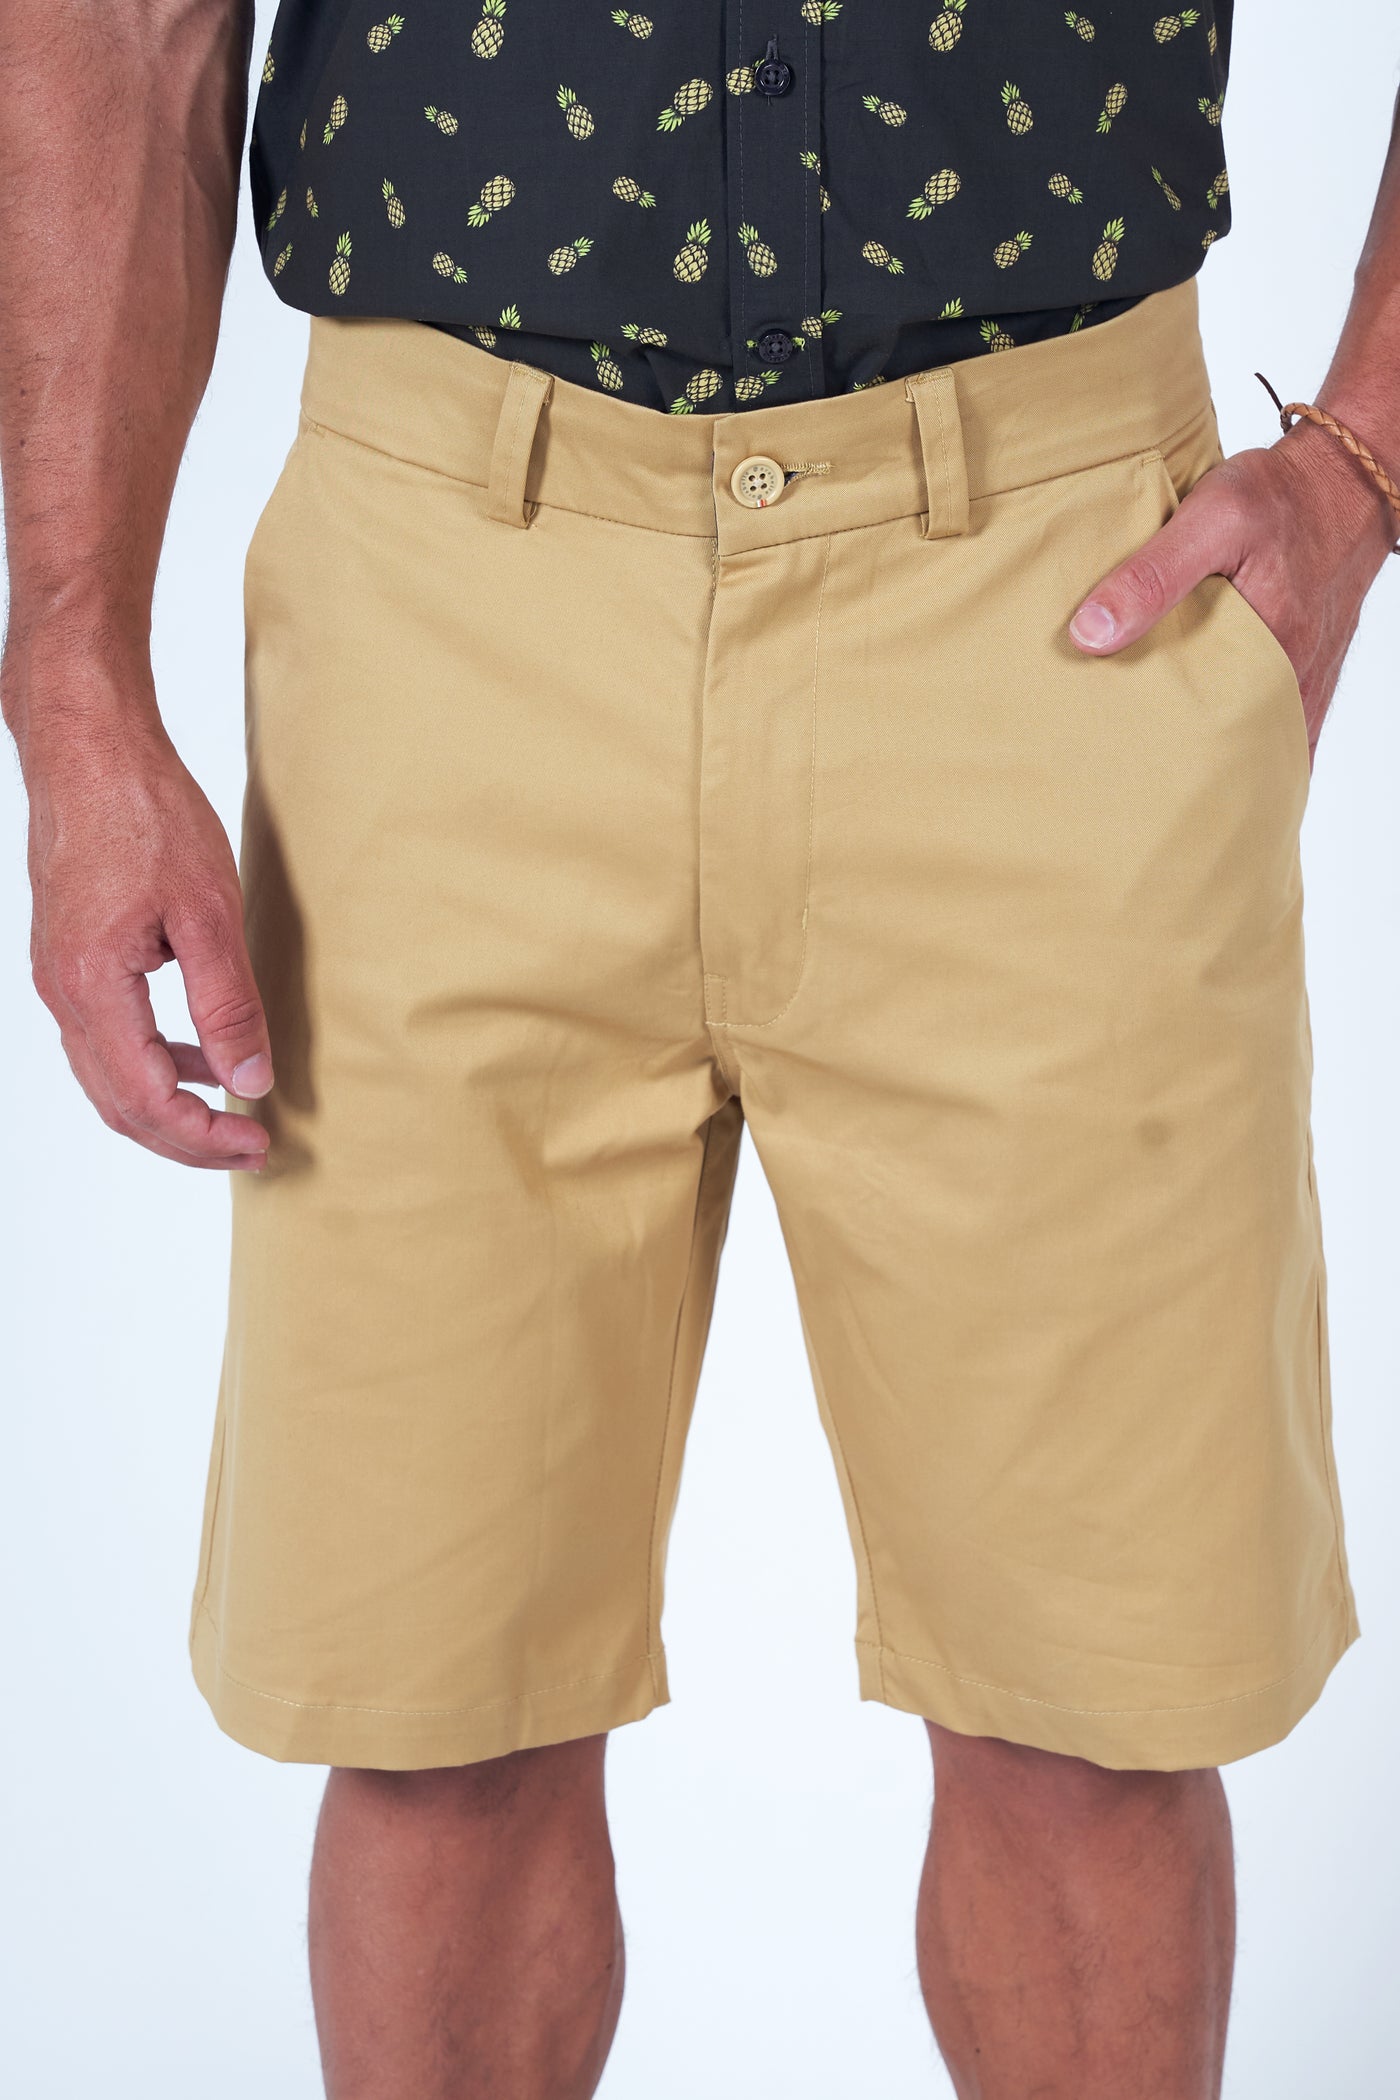 Pantalones cortos de dunas de arena